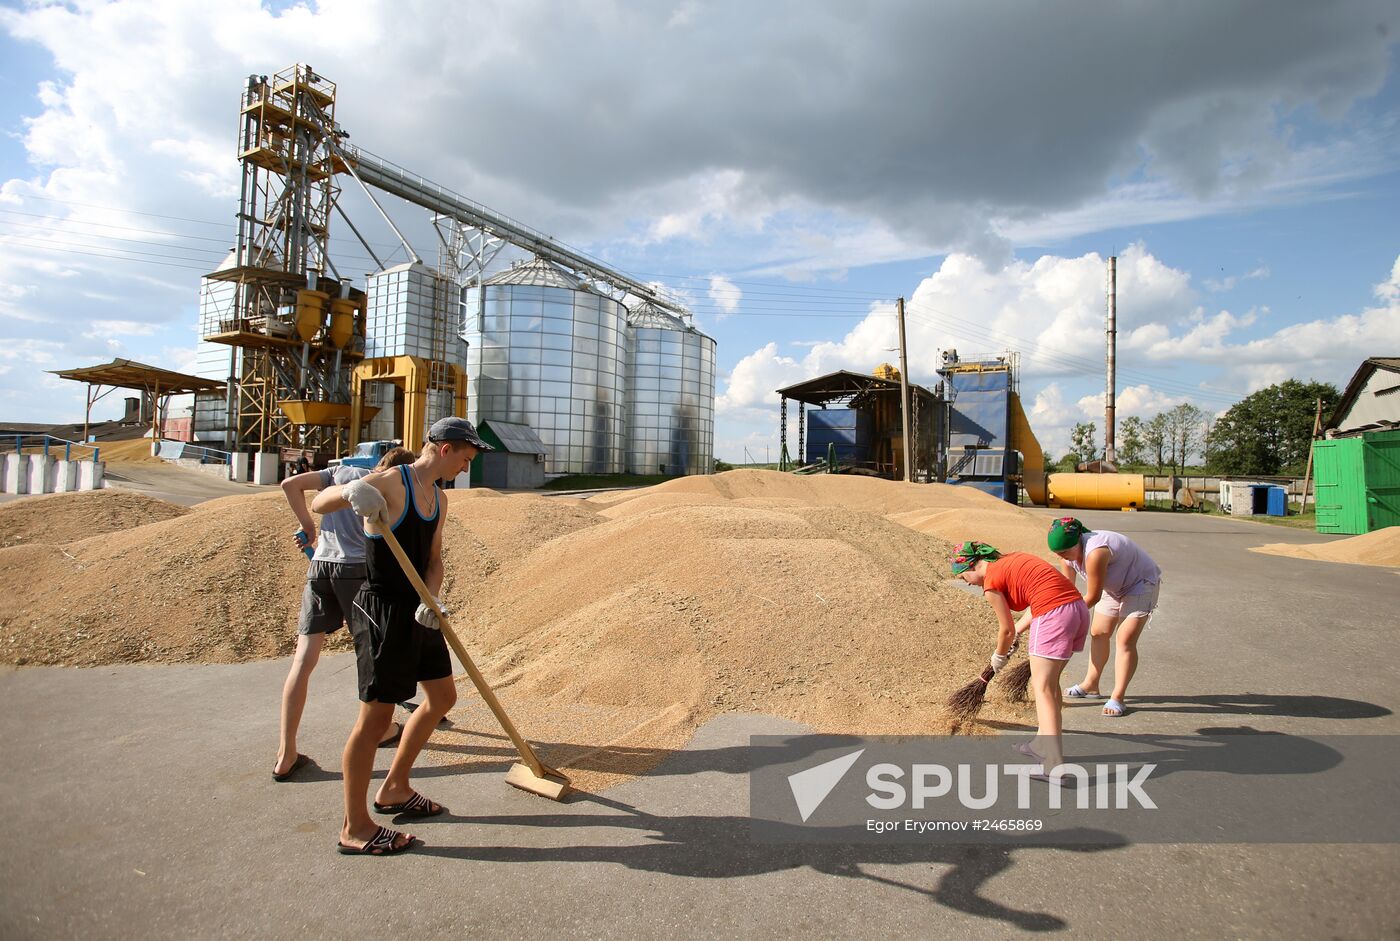 Harvesting grain crops in Belarus